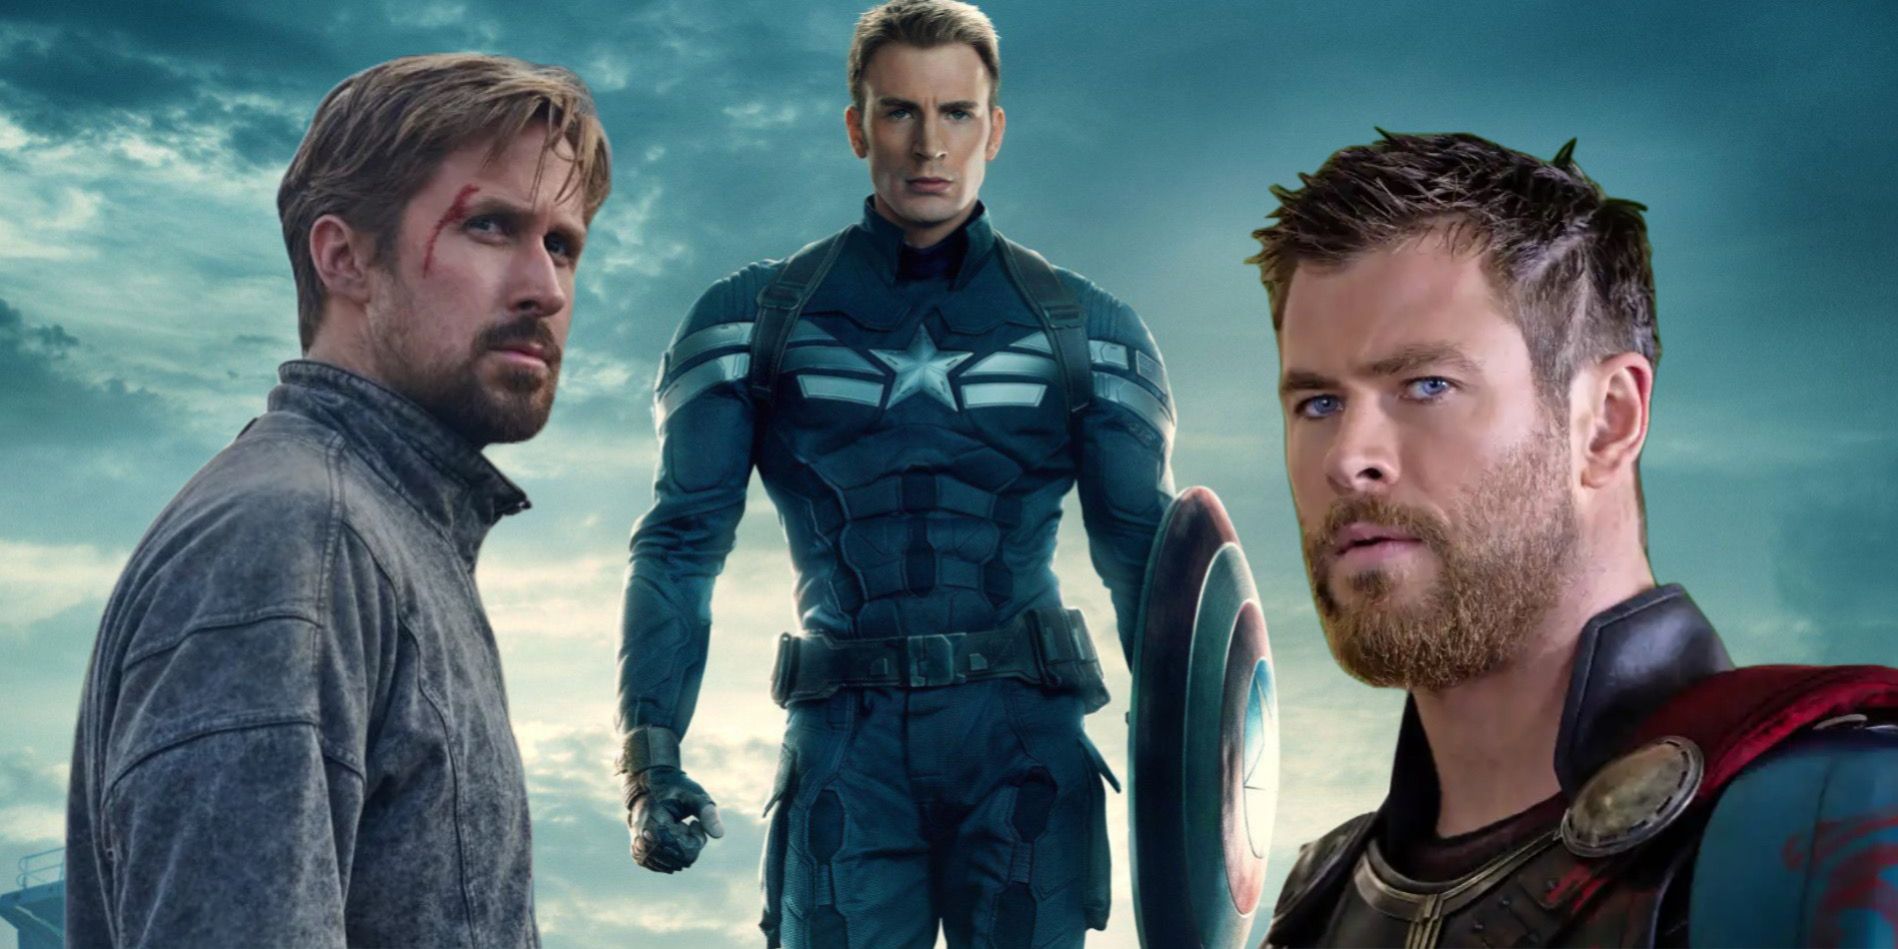 Ryan Gosling in The Gray Man, Chris Evans in Captain America, and Chris Hemsworth as Thor